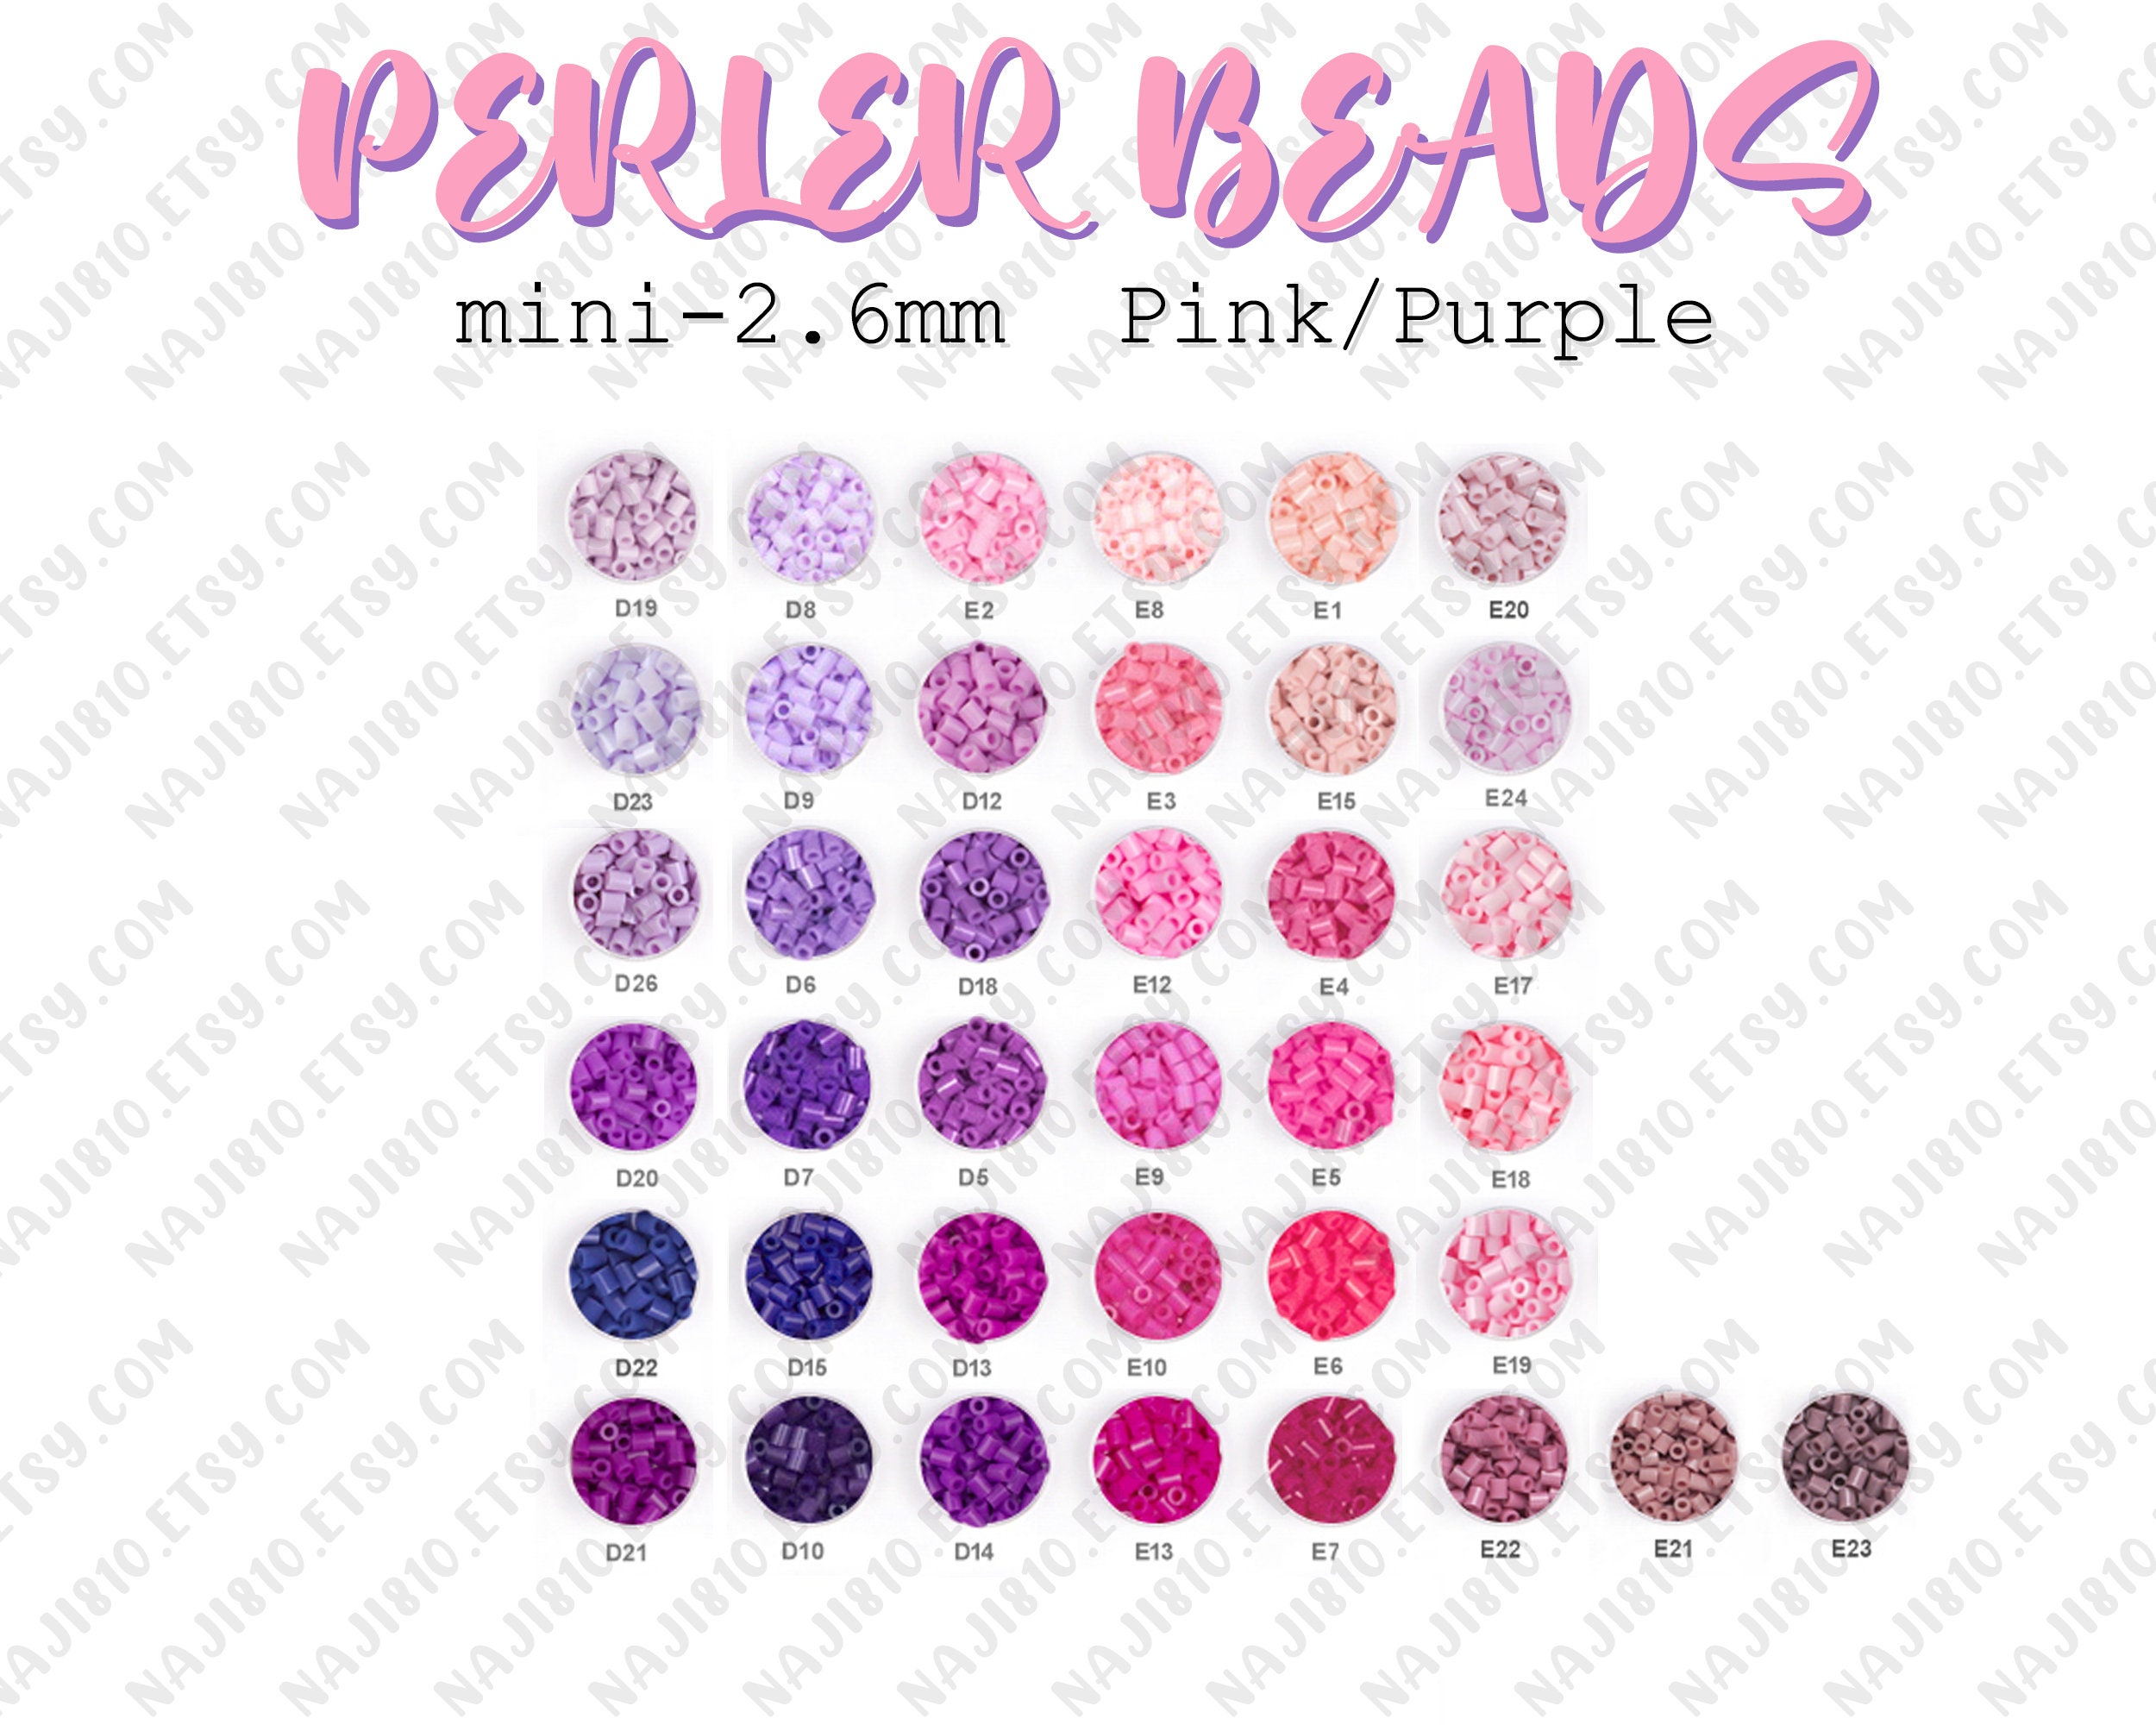 2.6mm Mini Beads Refill Color-H(White/Grey/Black) - (Perler Beads/Hama  Beads/Fuse Beads)